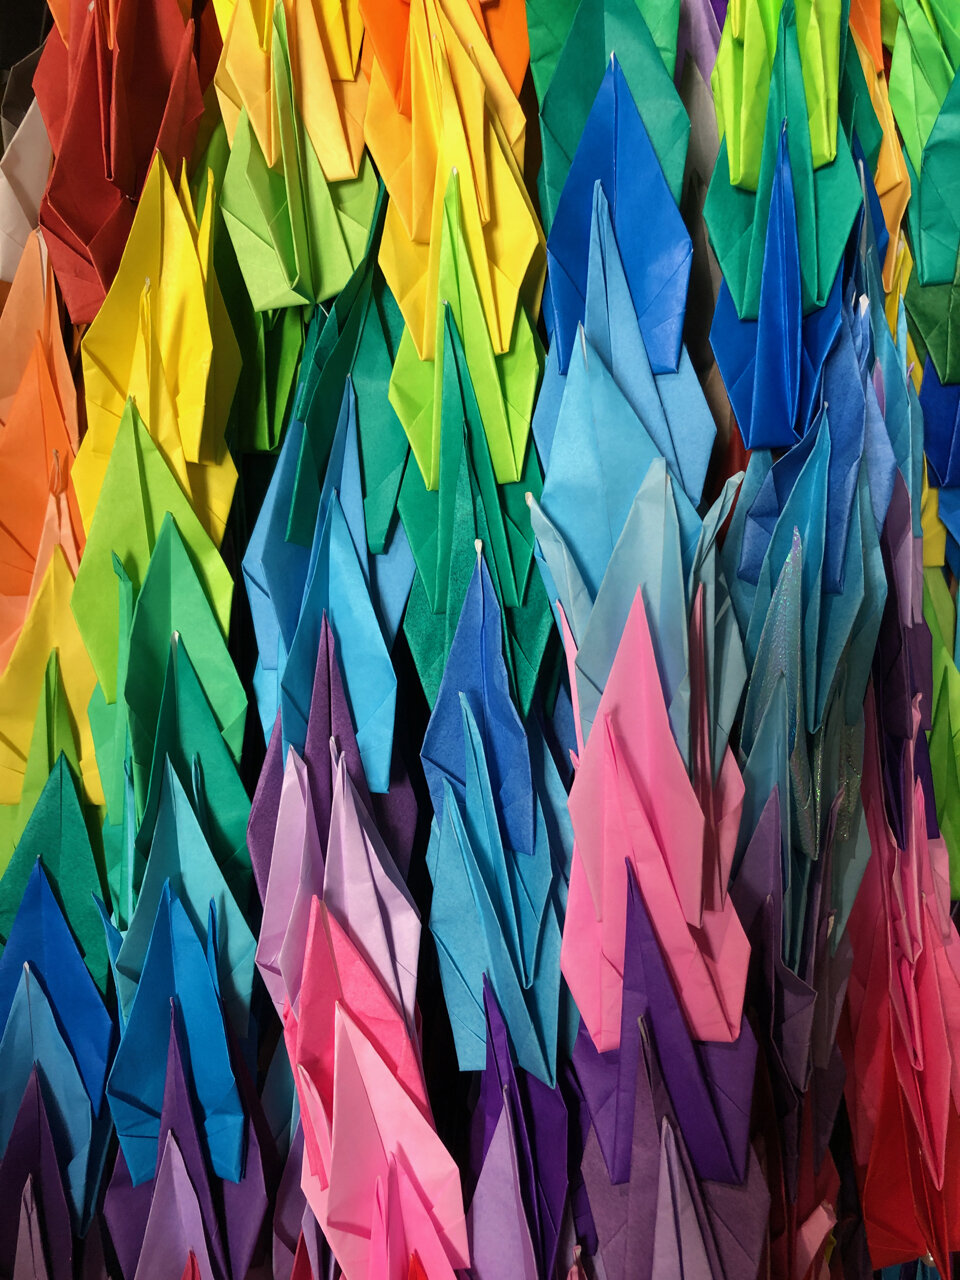 Origami Cranes Of Peace